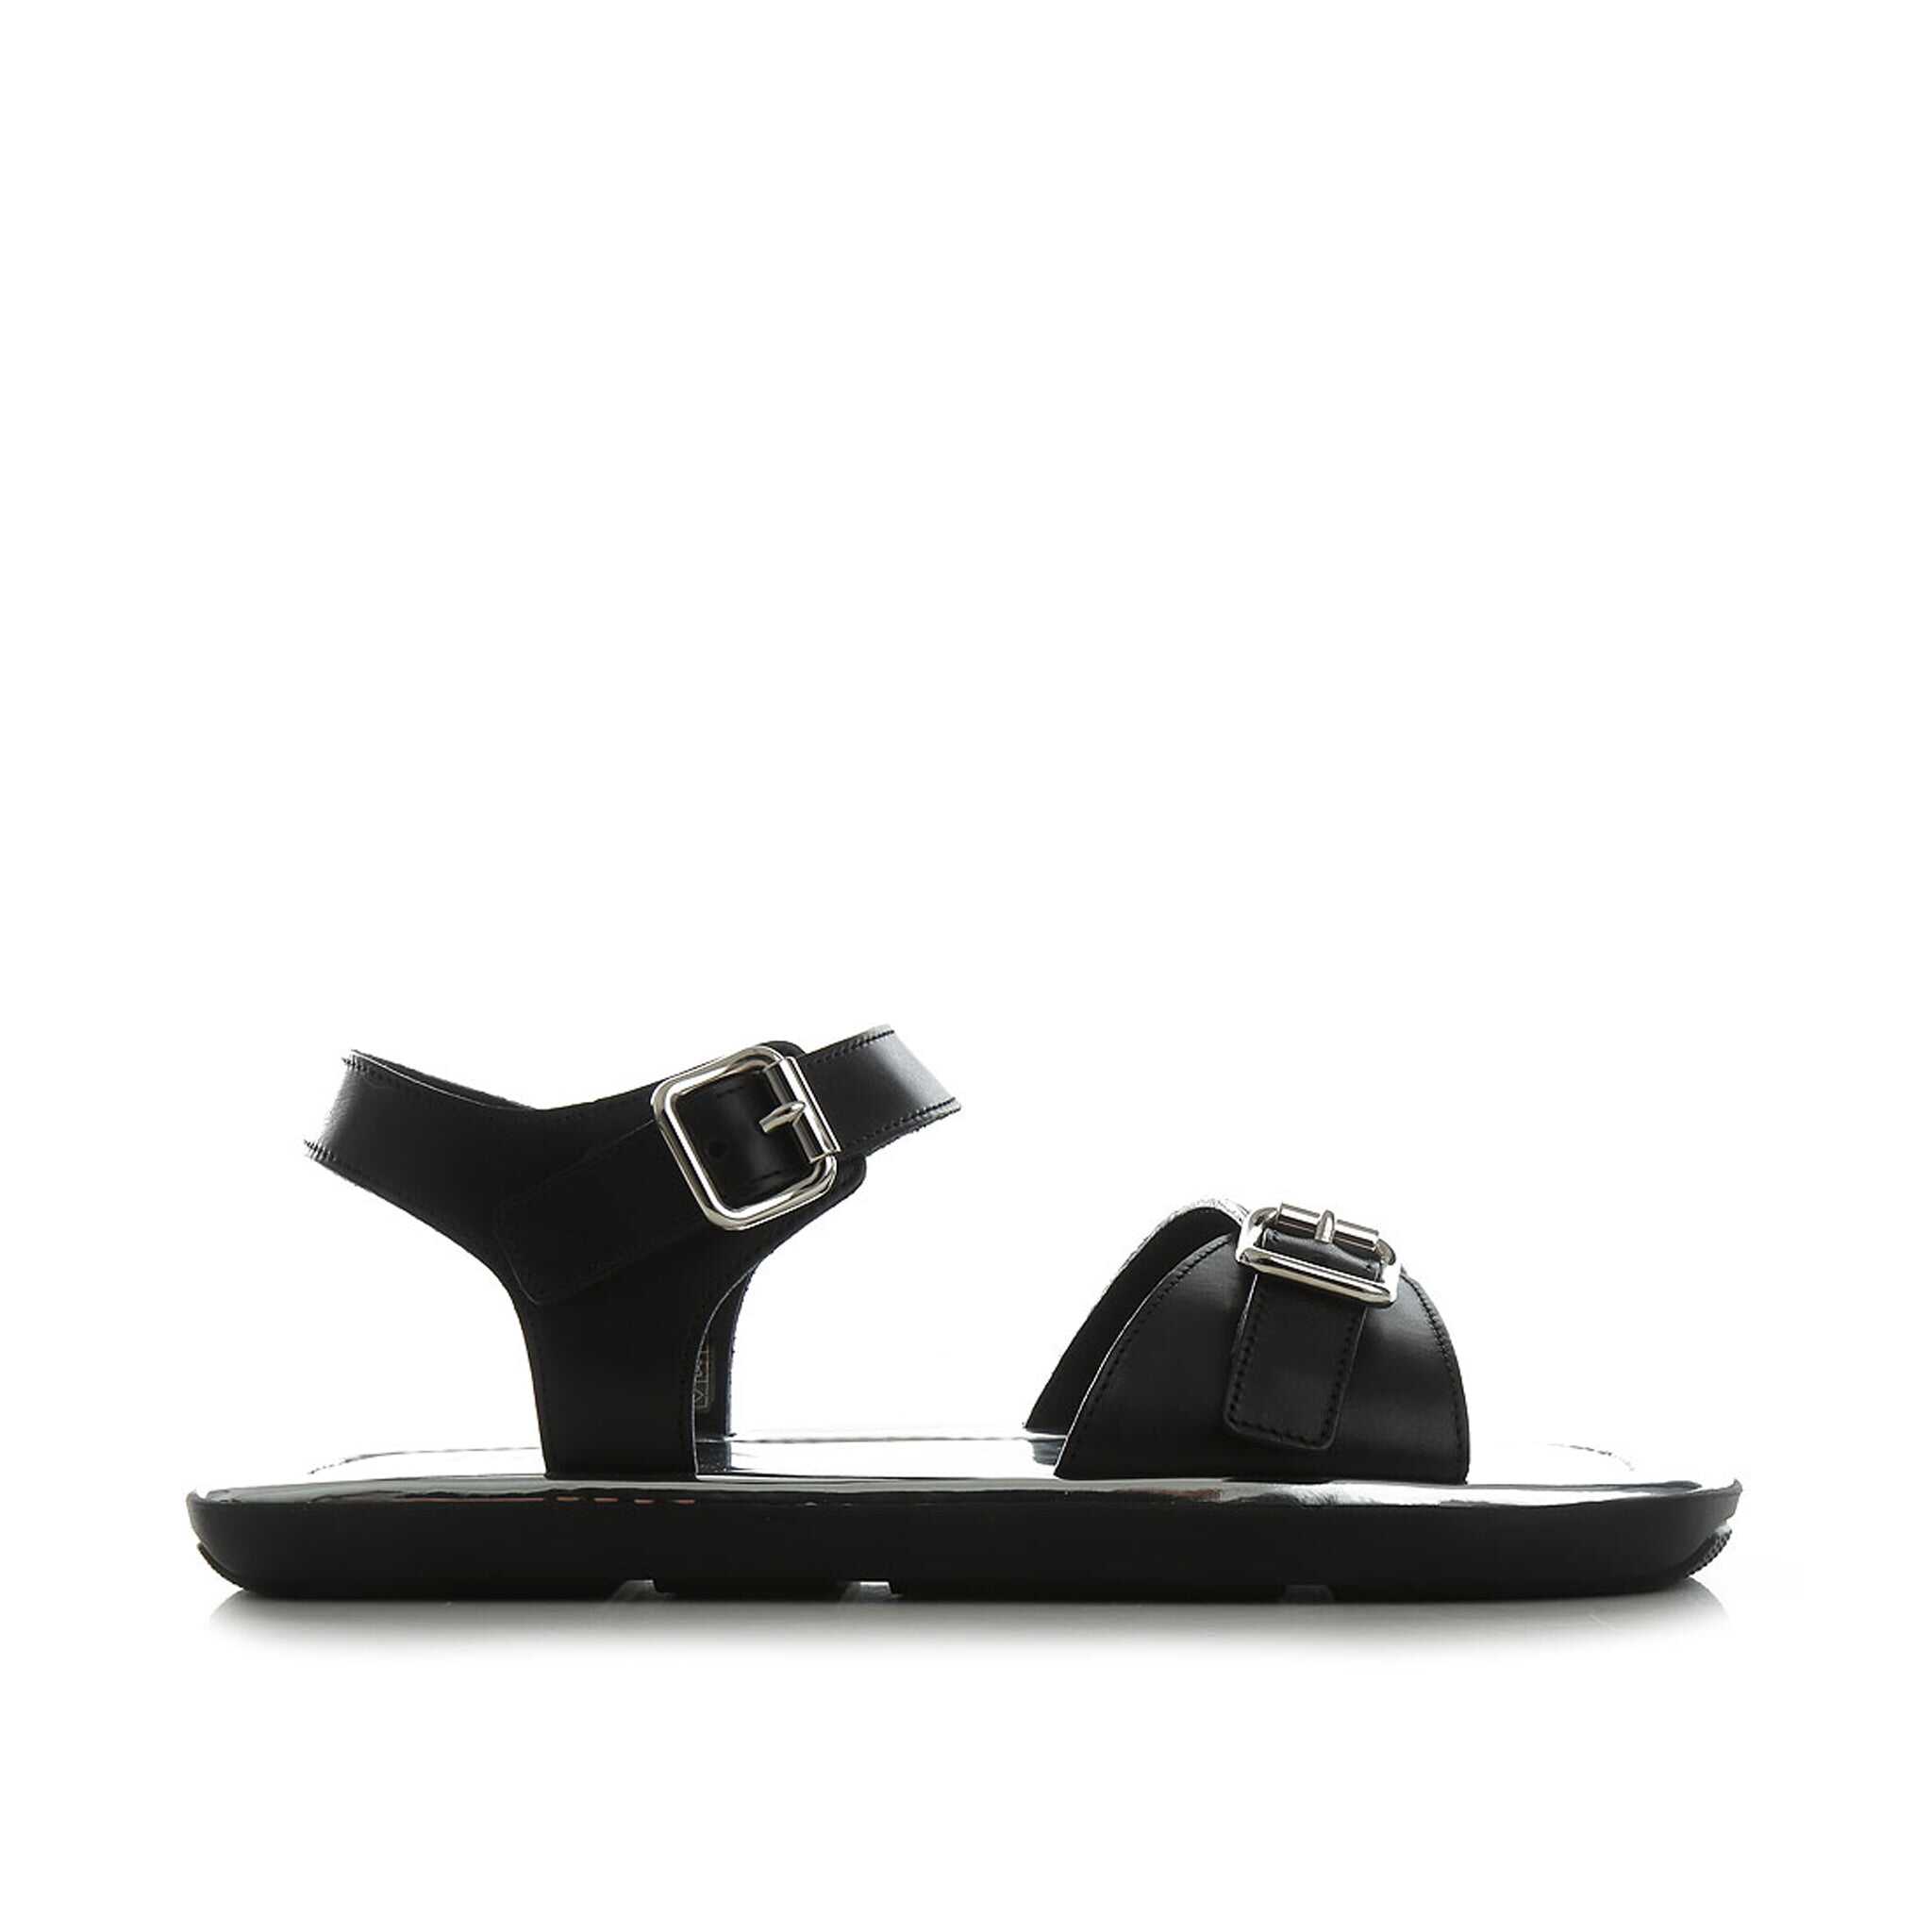 Poze Prada Leather Sandals Black B-Mall